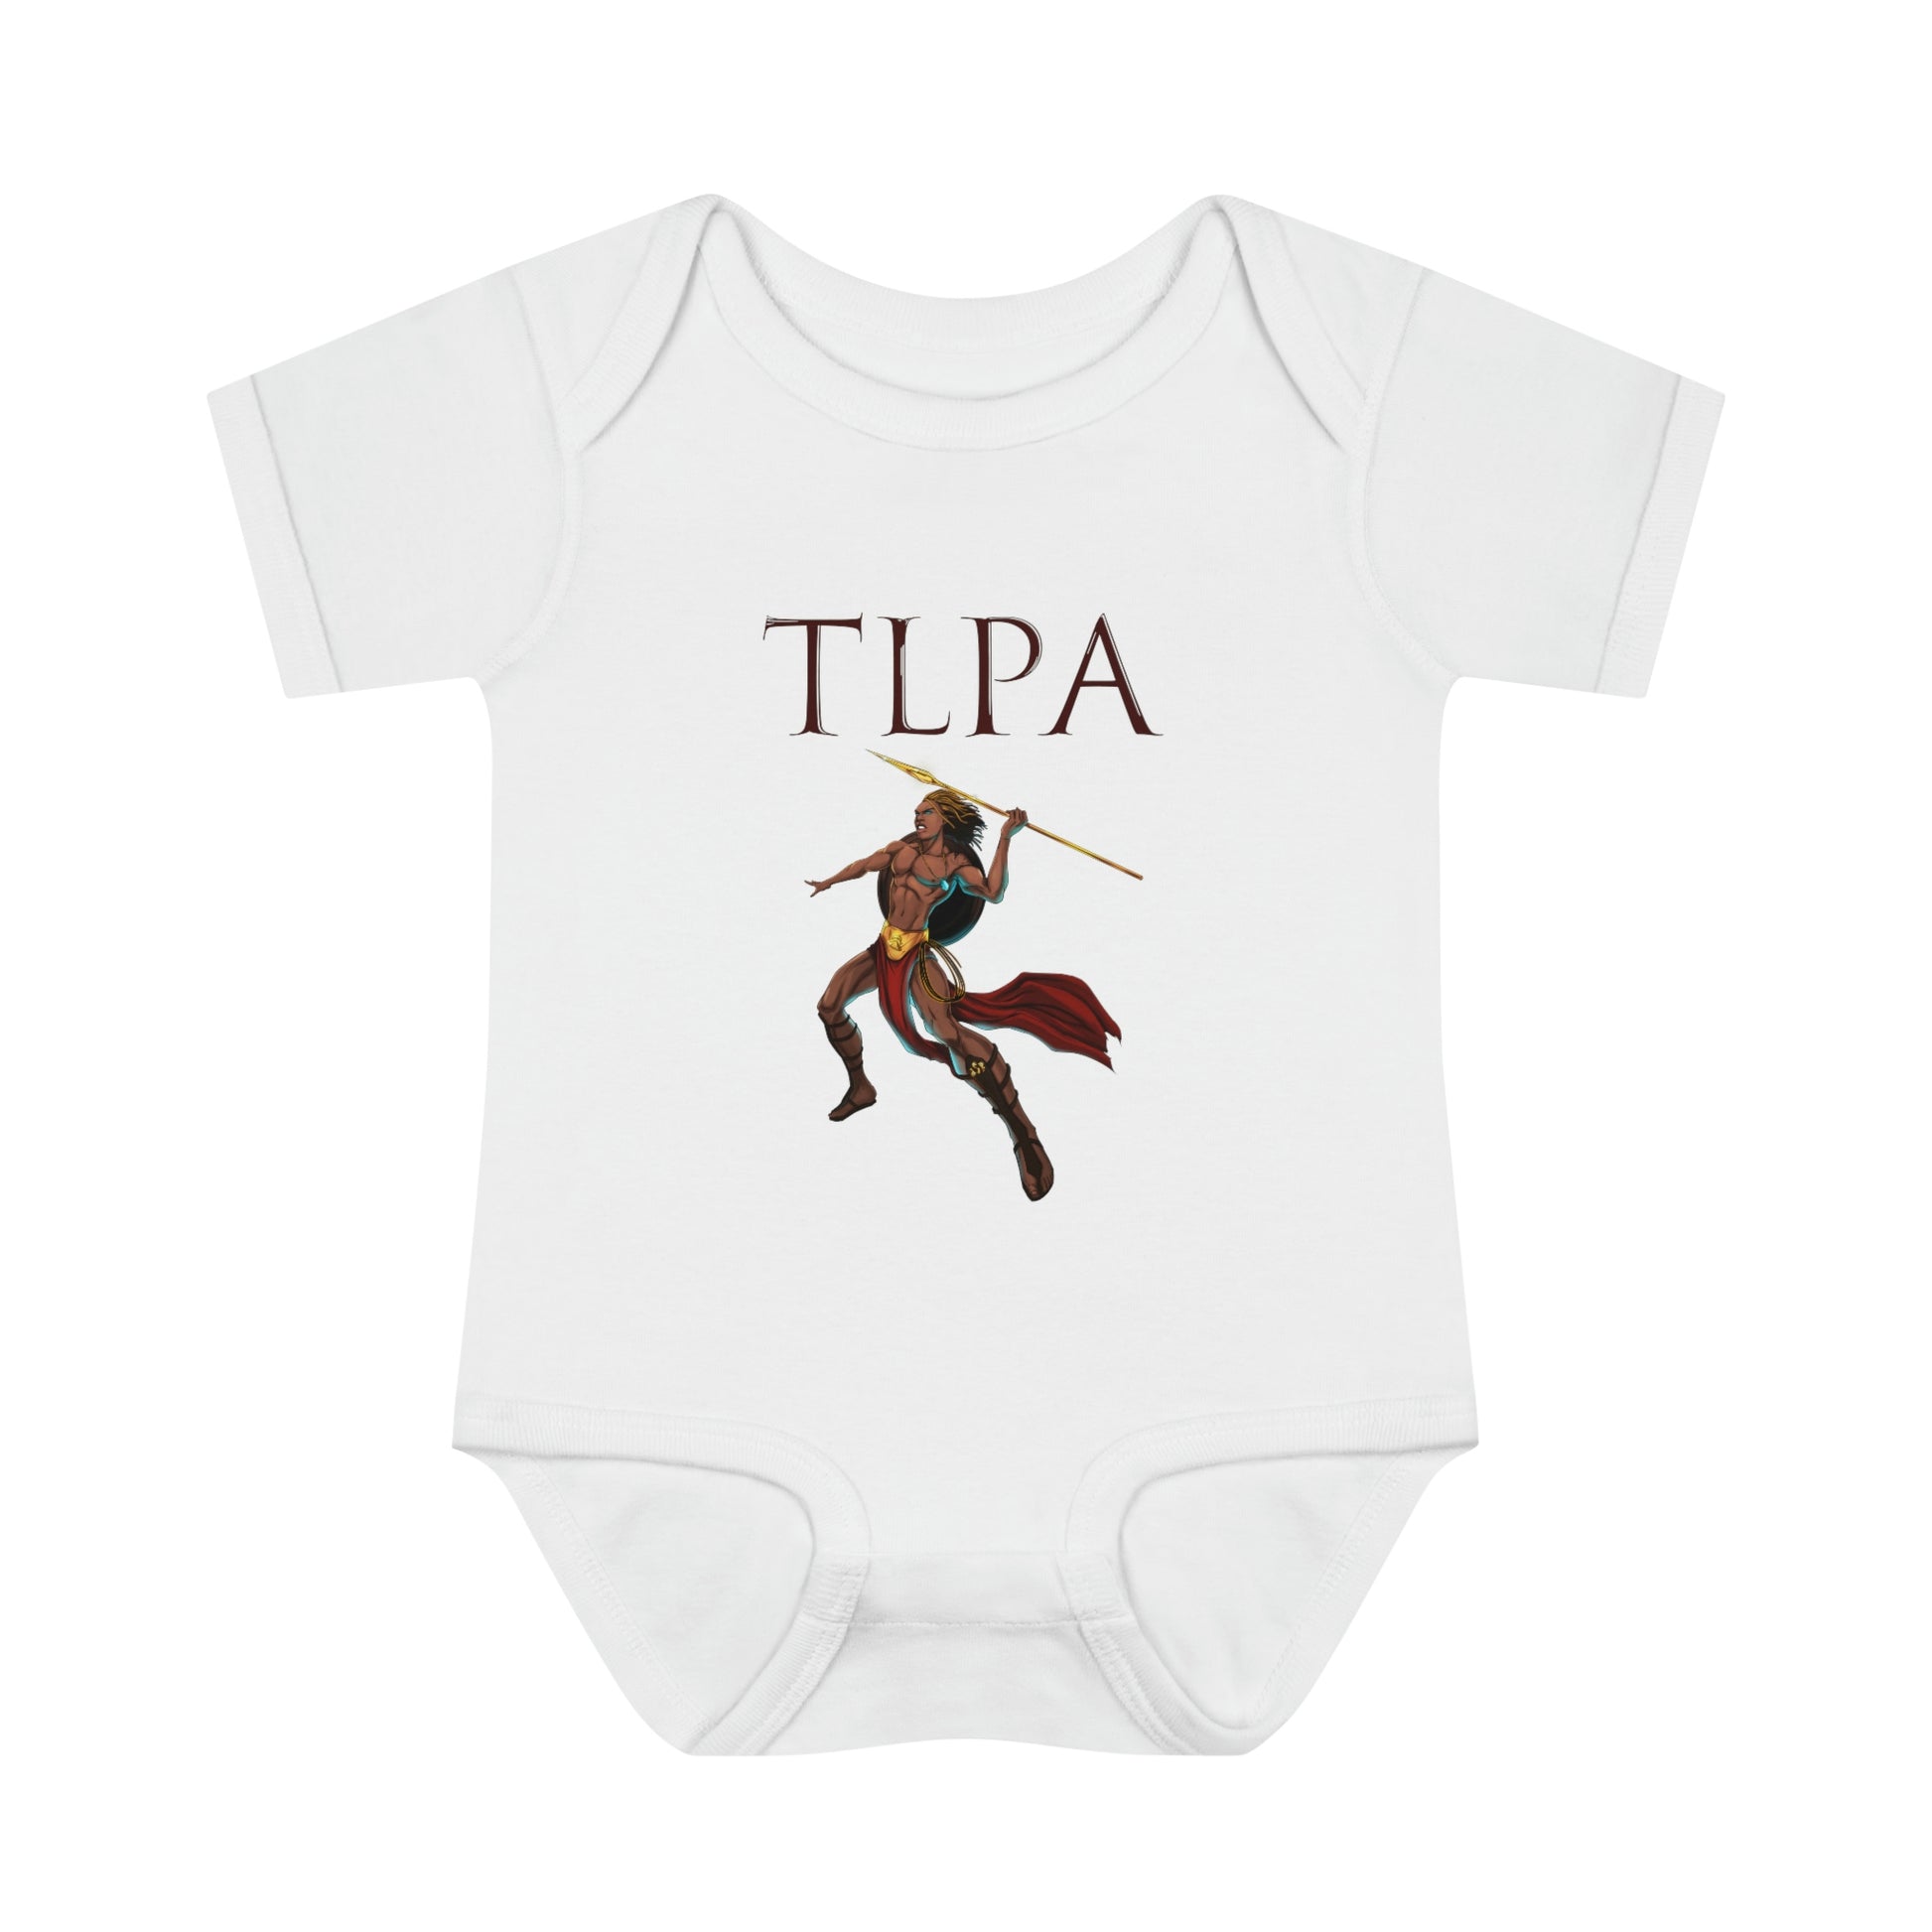 TLPA Infant Baby Rib Bodysuit - SHOPTLPA.COM